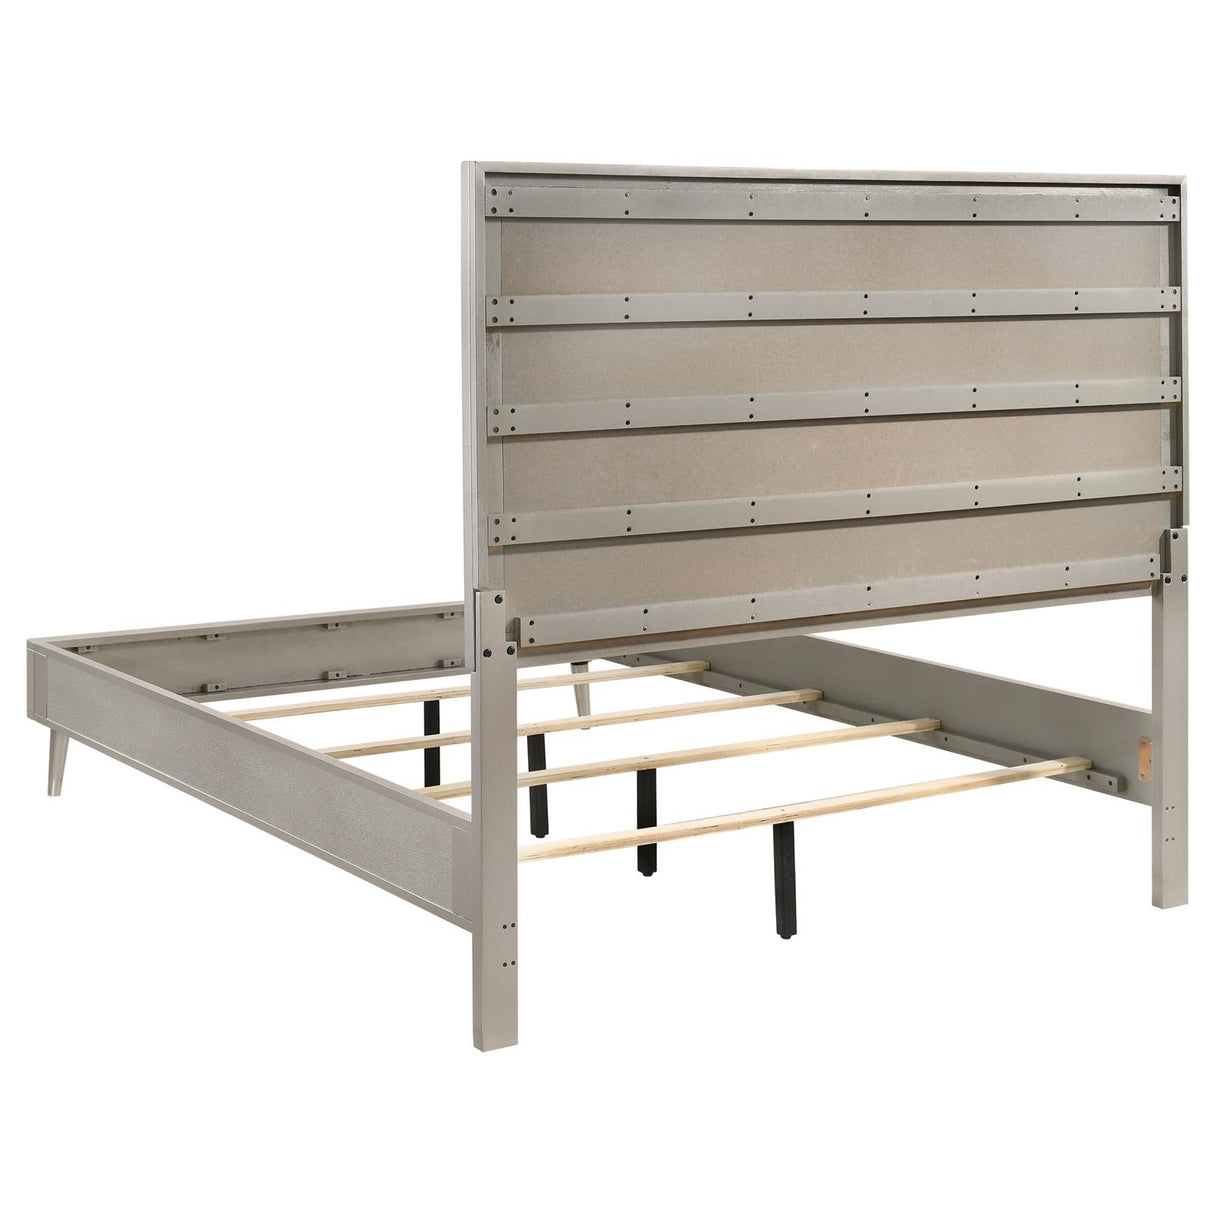 Ramon Queen Panel Bed Metallic Sterling - 222701Q - Luna Furniture